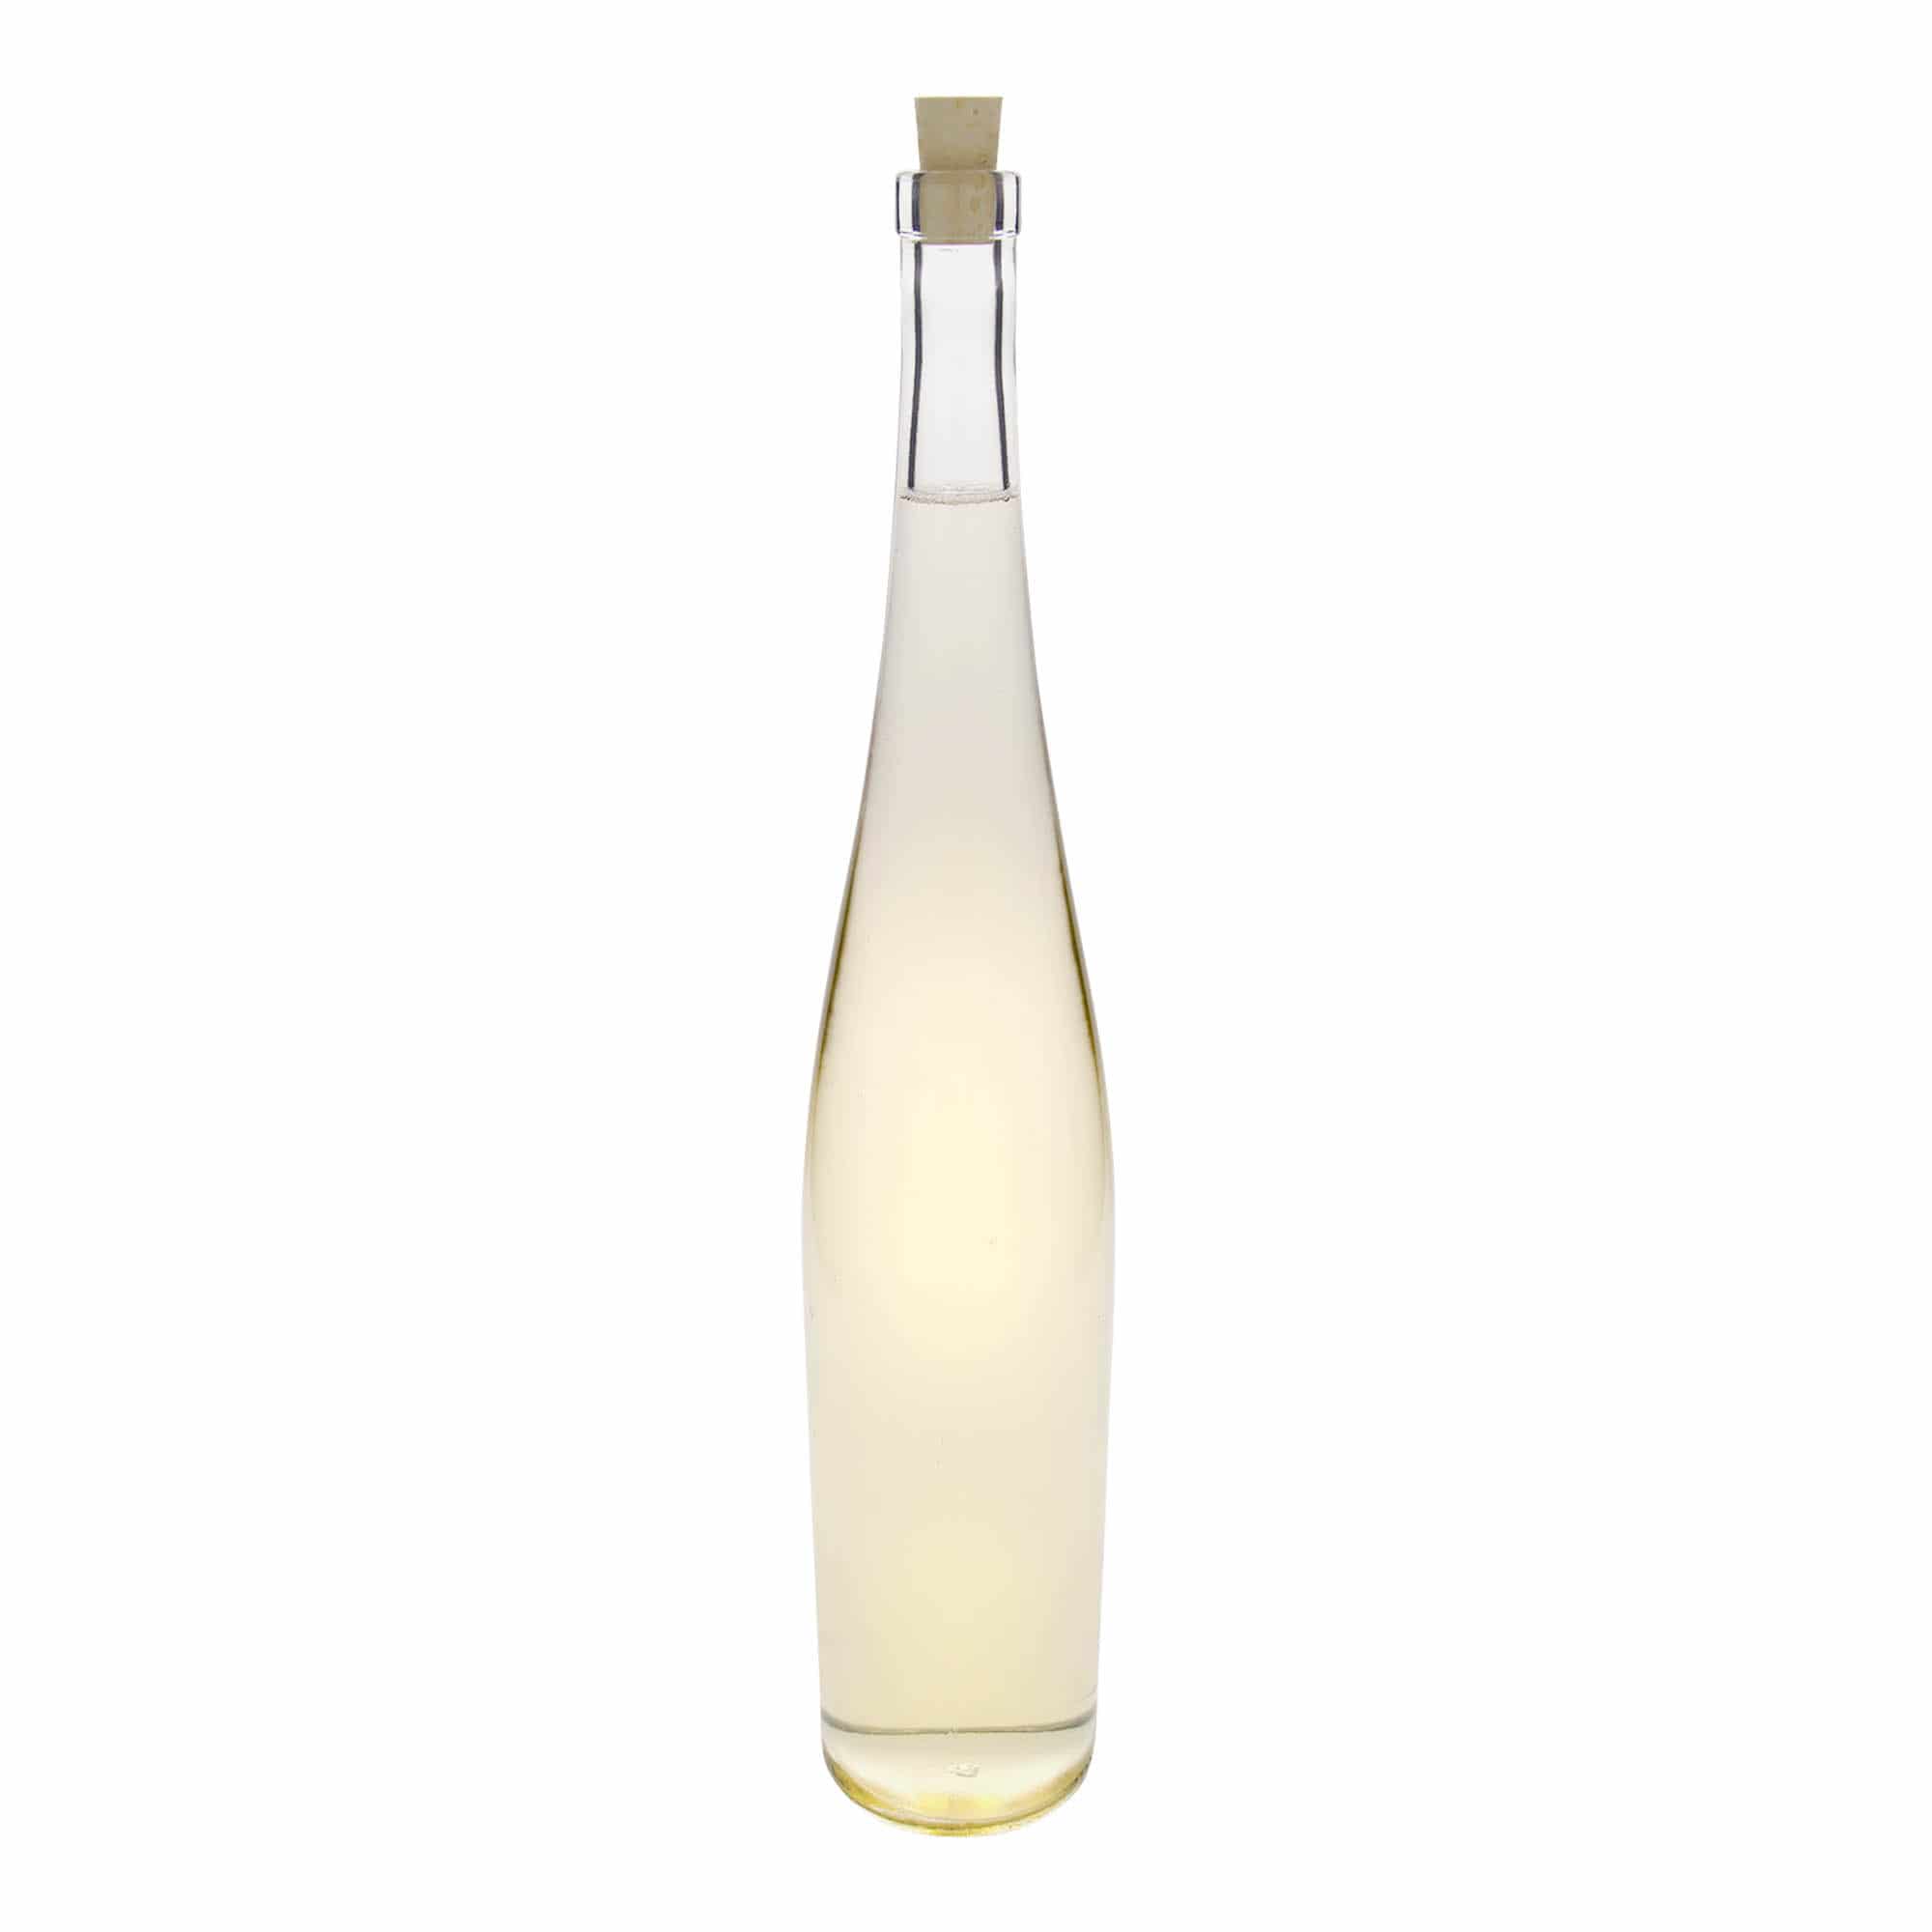 1500 ml butelka szklana 'Weinschlegel', zamknięcie: korek